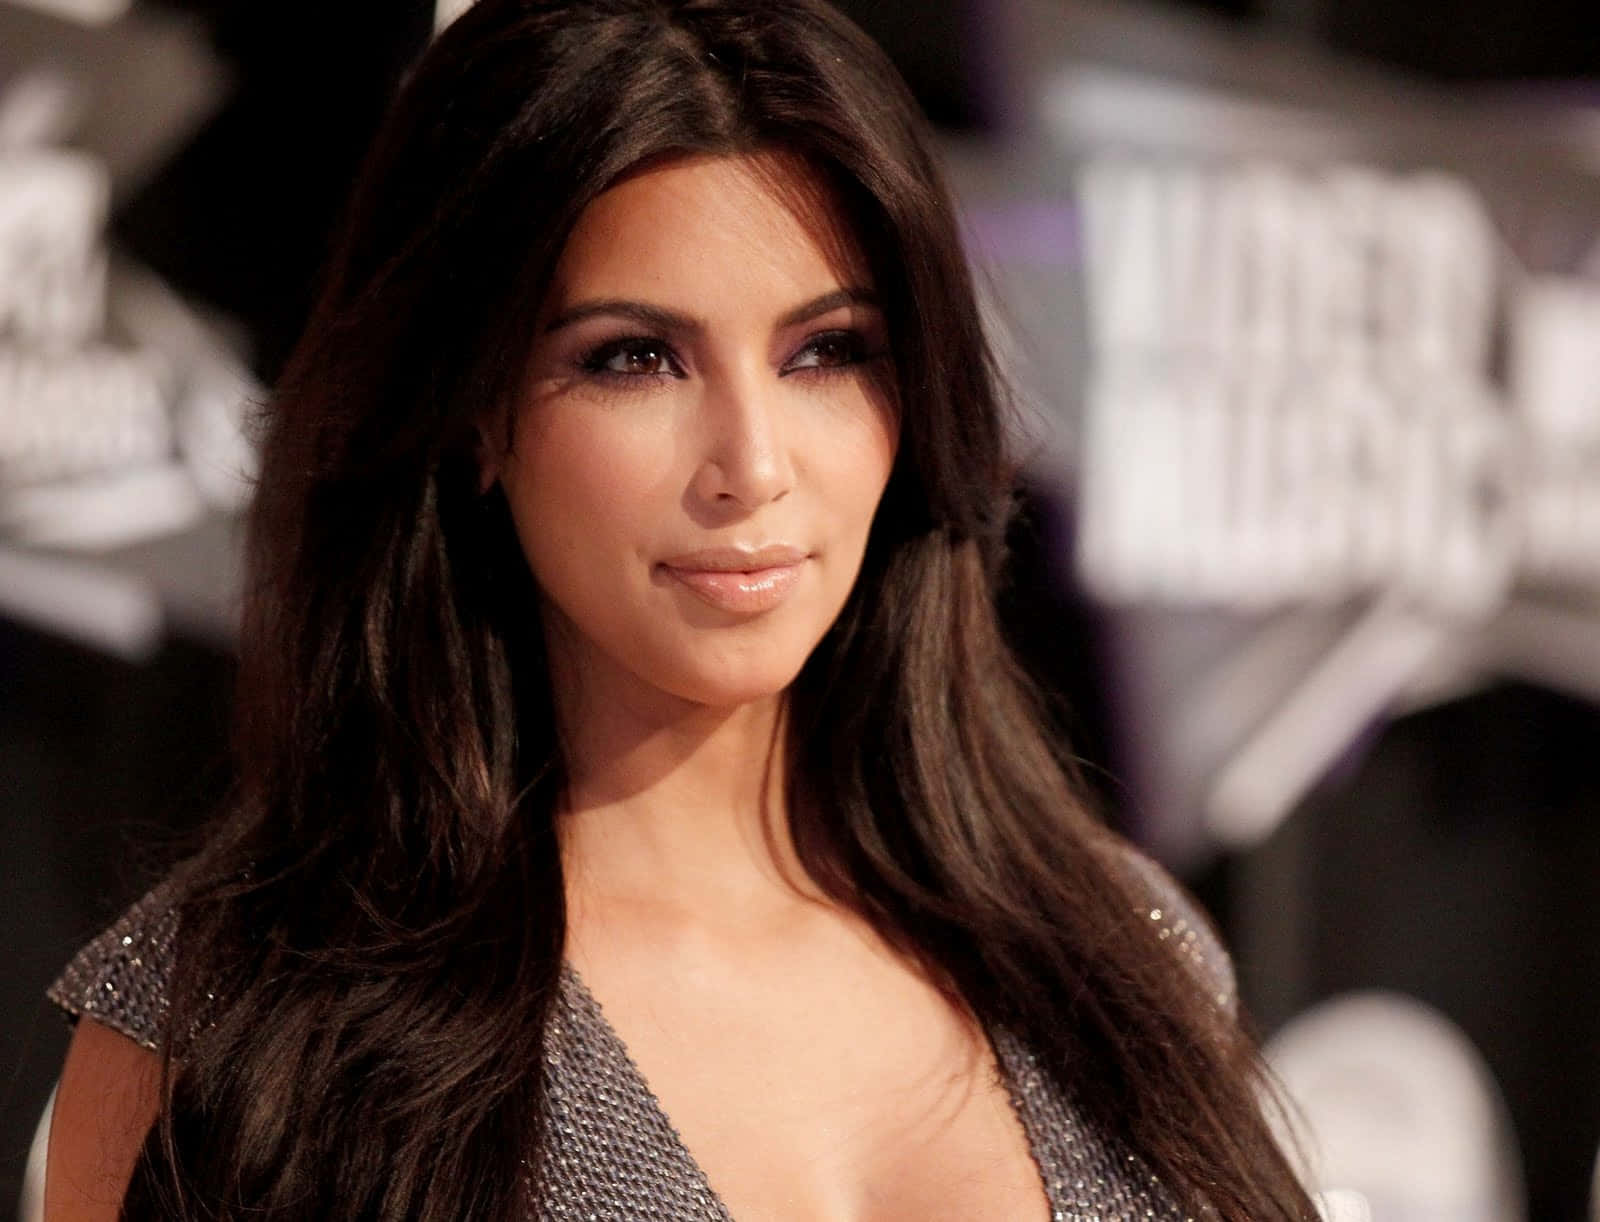 Kim Kardashian looking confident and fashionable